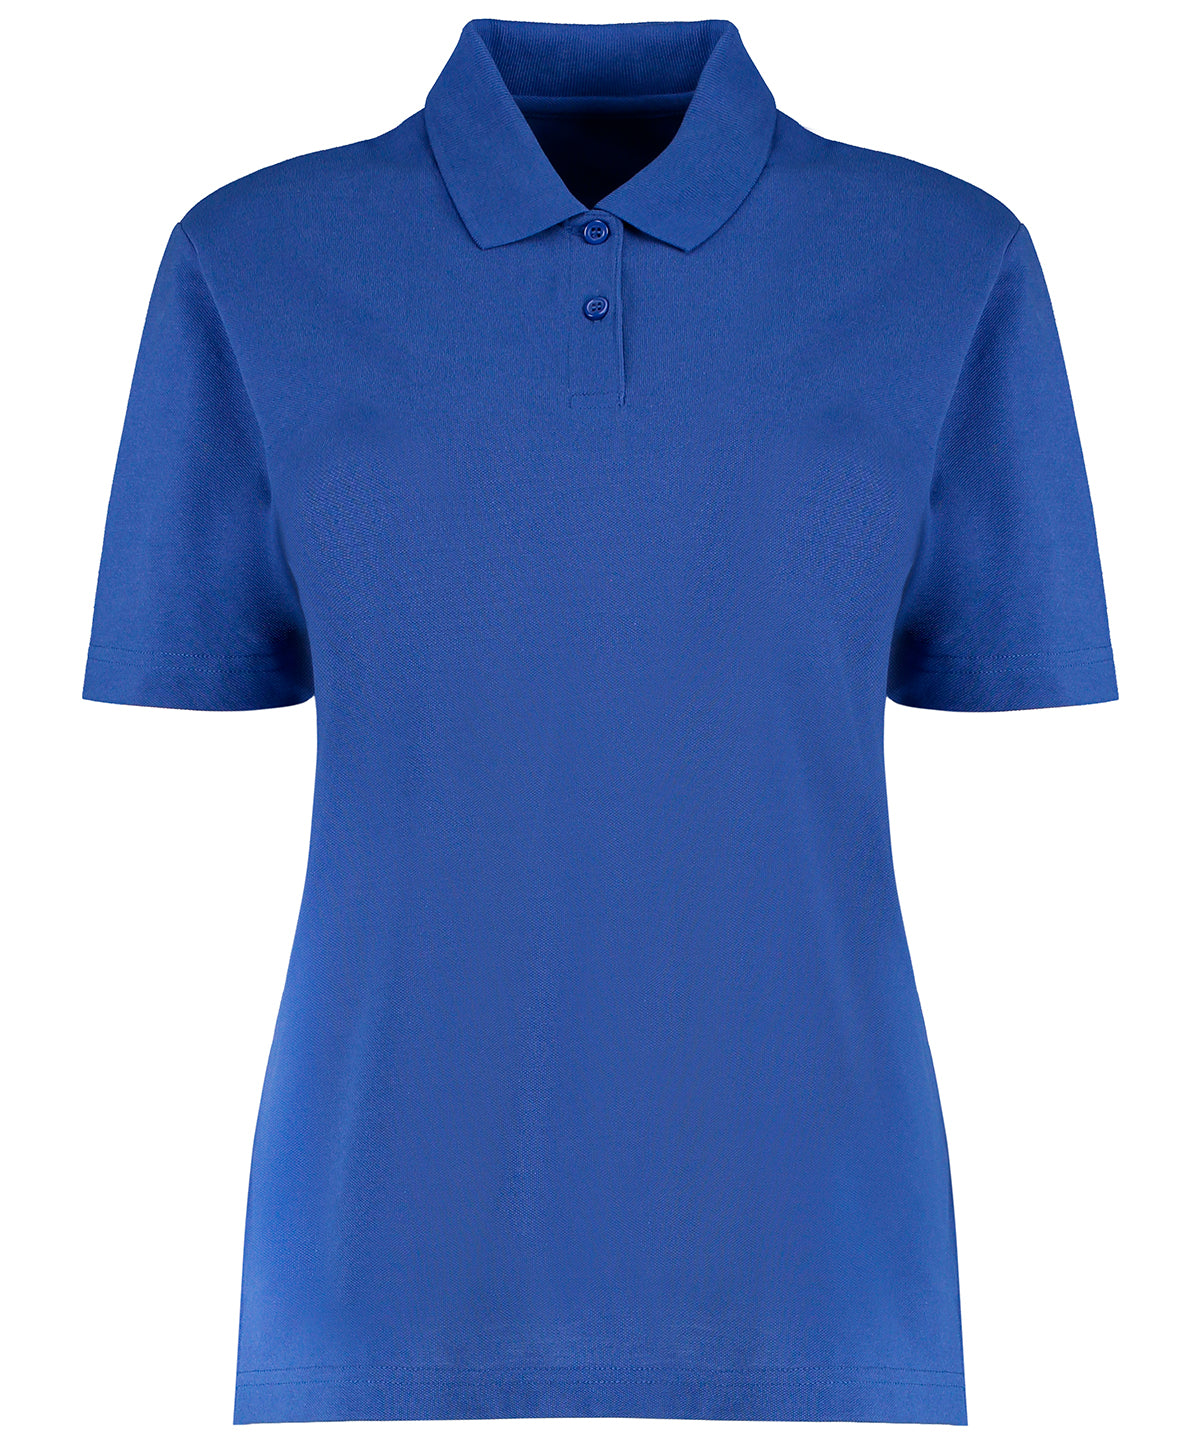 Personalised Polo Shirts - Black Kustom Kit Women's workforce polo (regular fit)